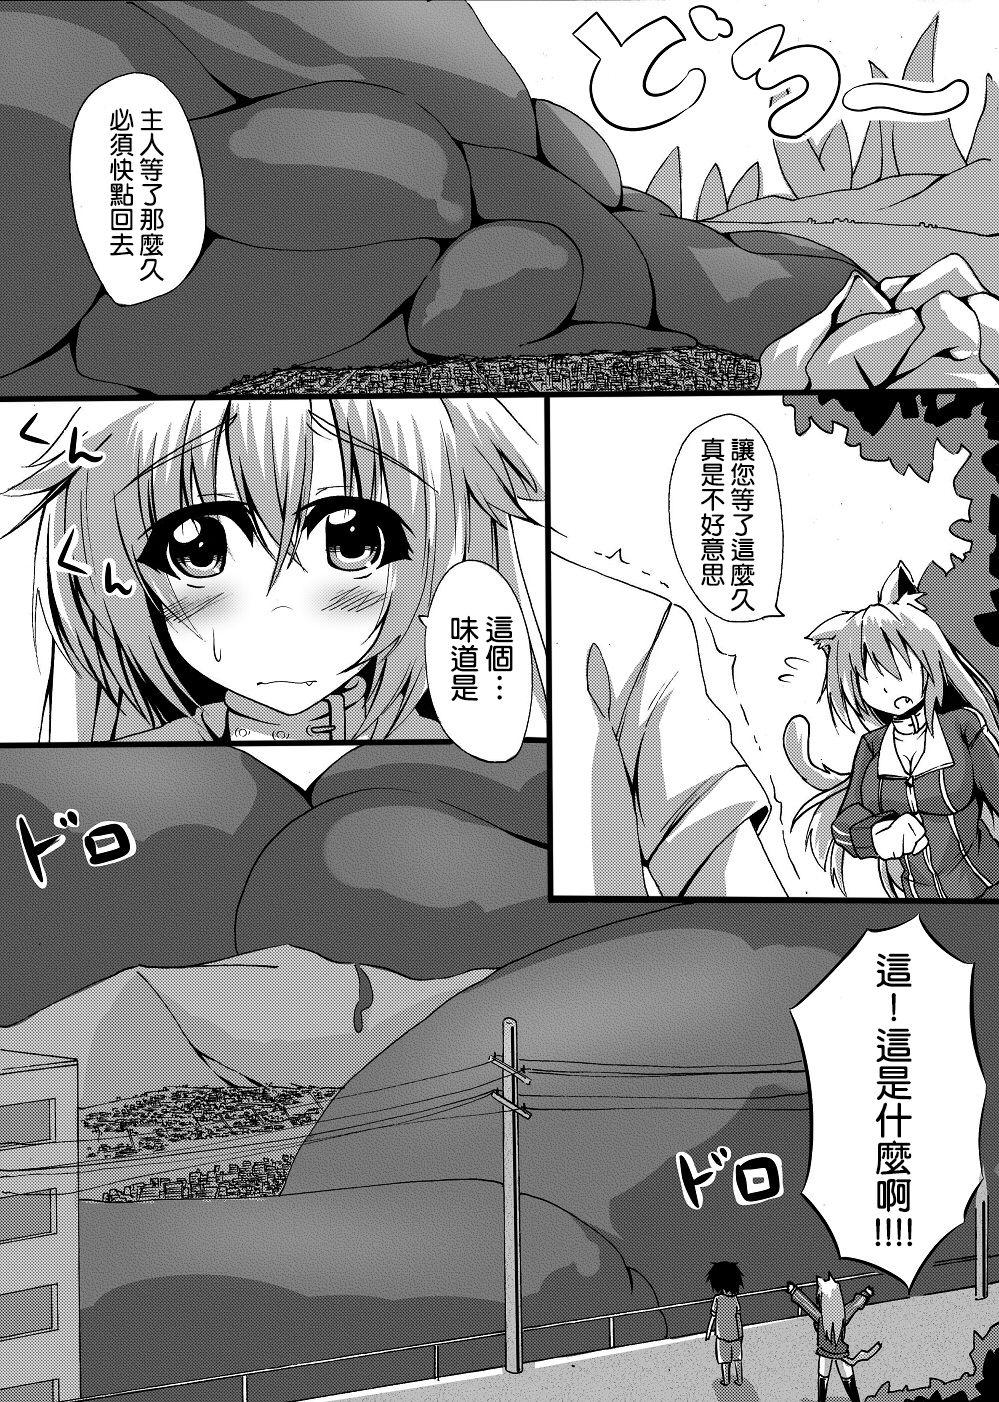 Scat Manga 11